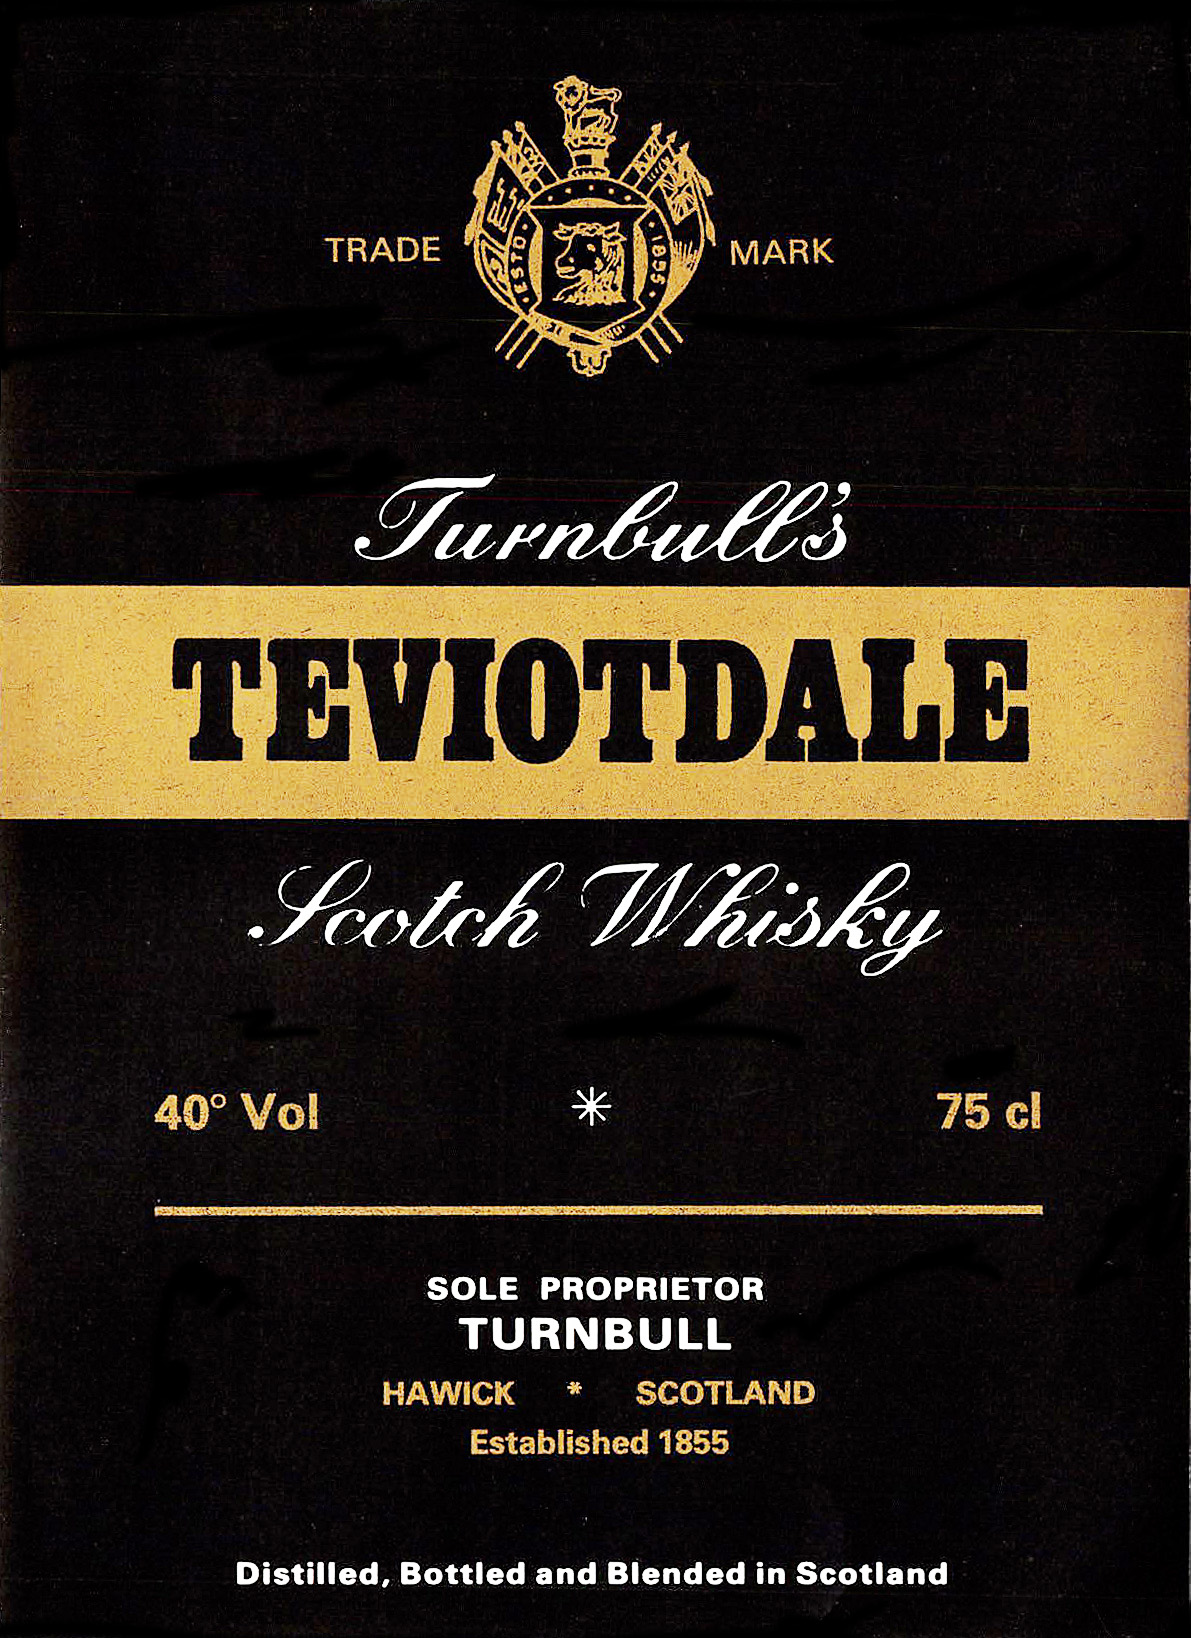 Teviotdale Scotch Whisky Label black